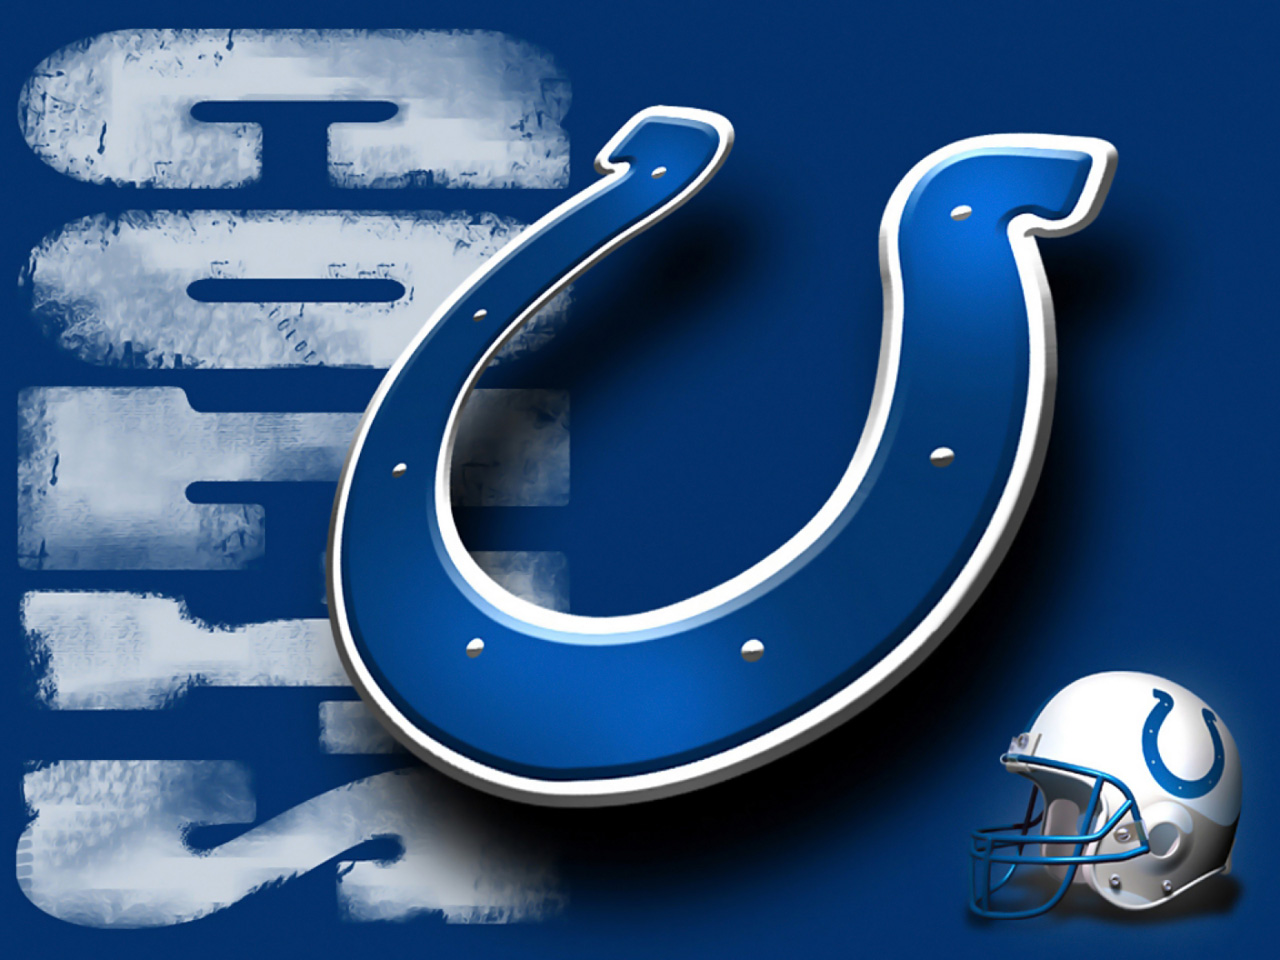 Colts Logo Wallpaper images & pictures - NearPics